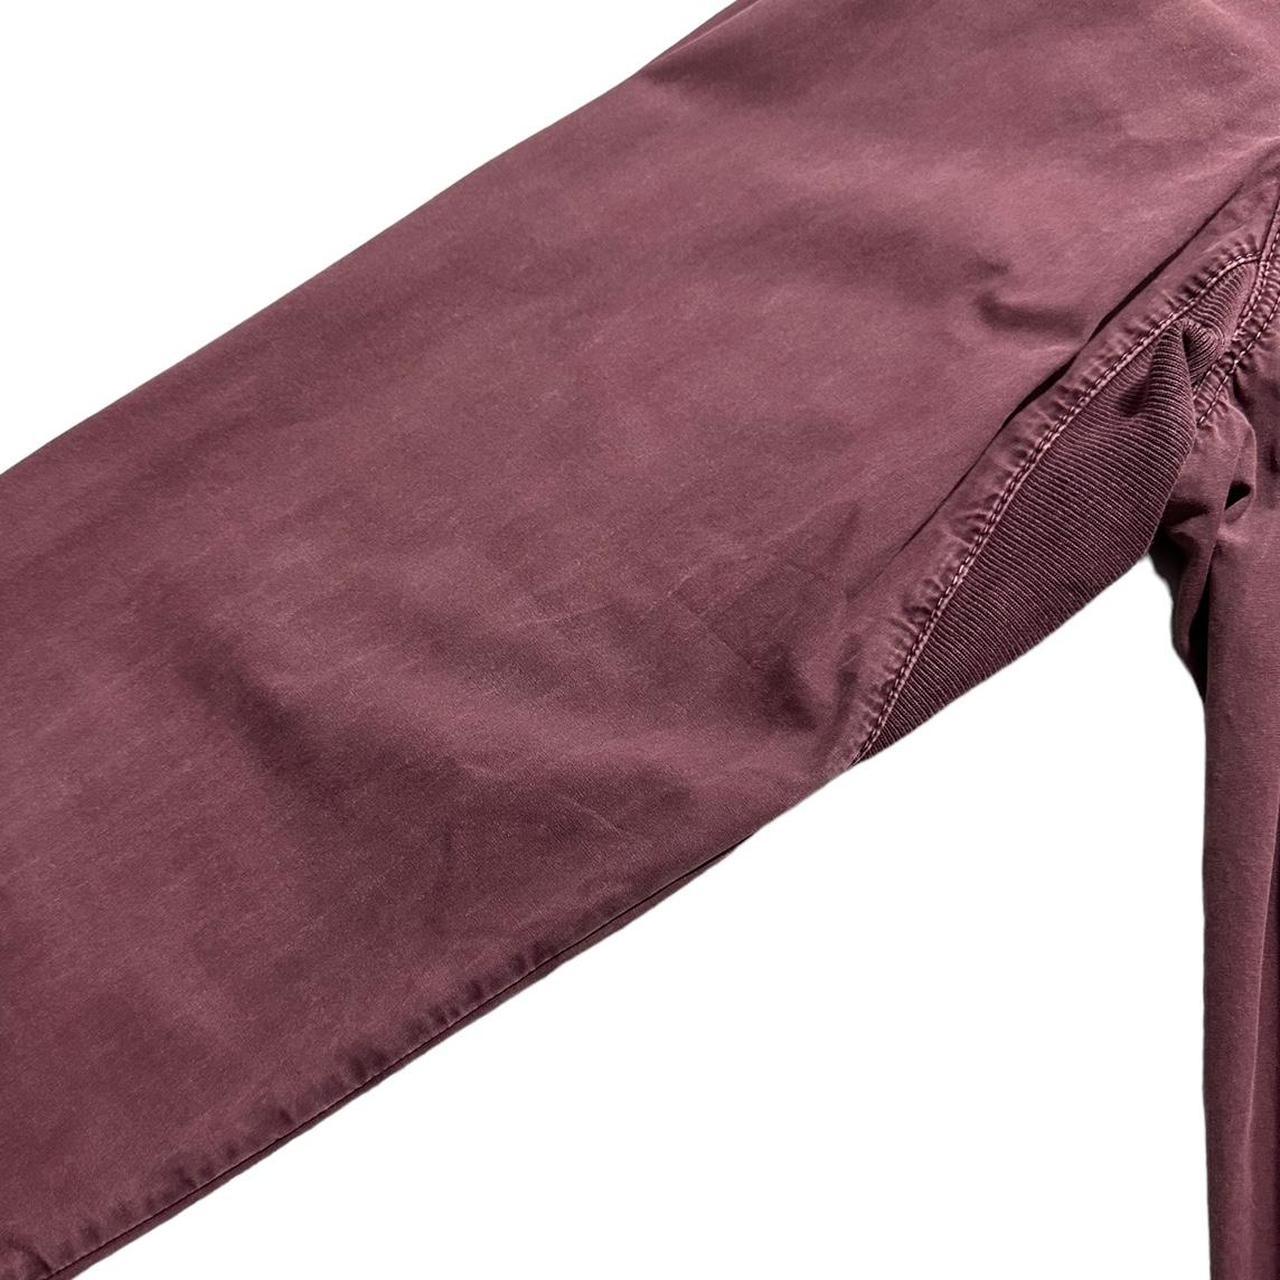 Stone Island burgundy side pocket overshirt - Known Source